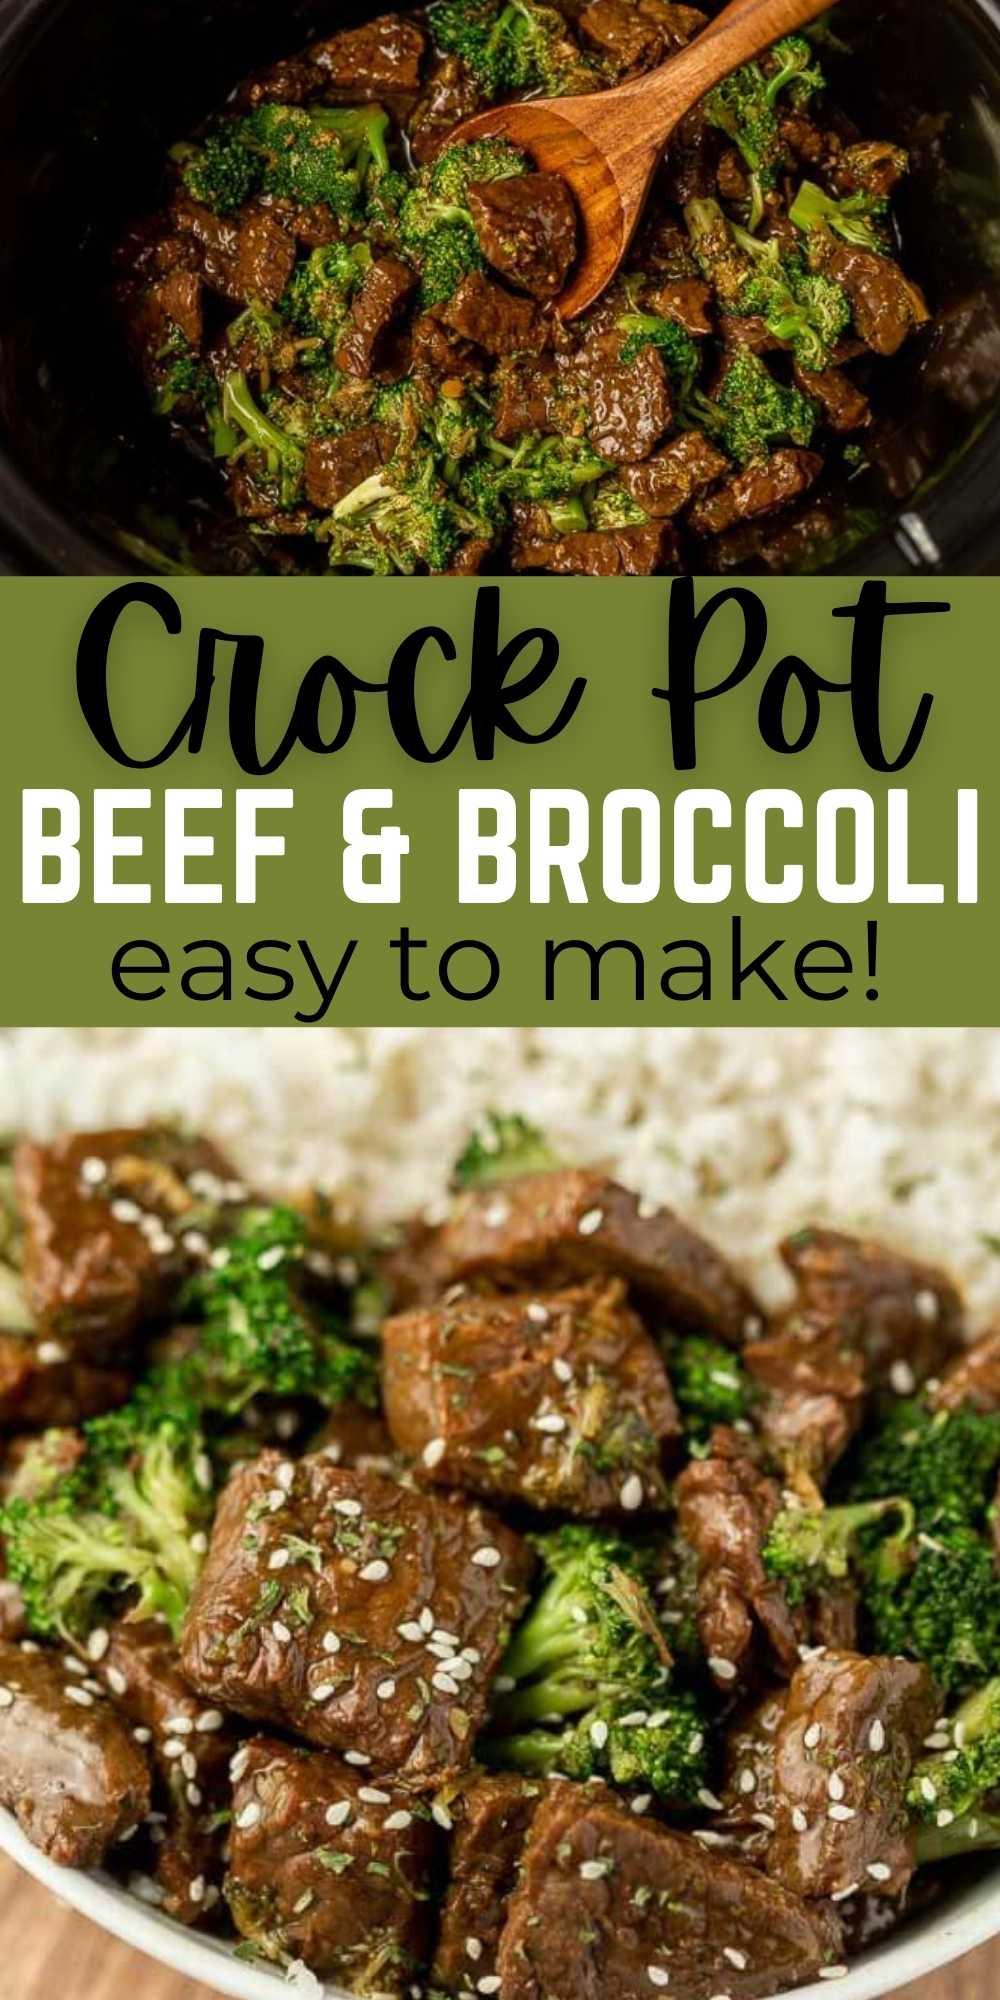 https://www.eatingonadime.com/wp-content/uploads/2019/03/Crock-Pot-Beef-Broccoli-3-1.jpg